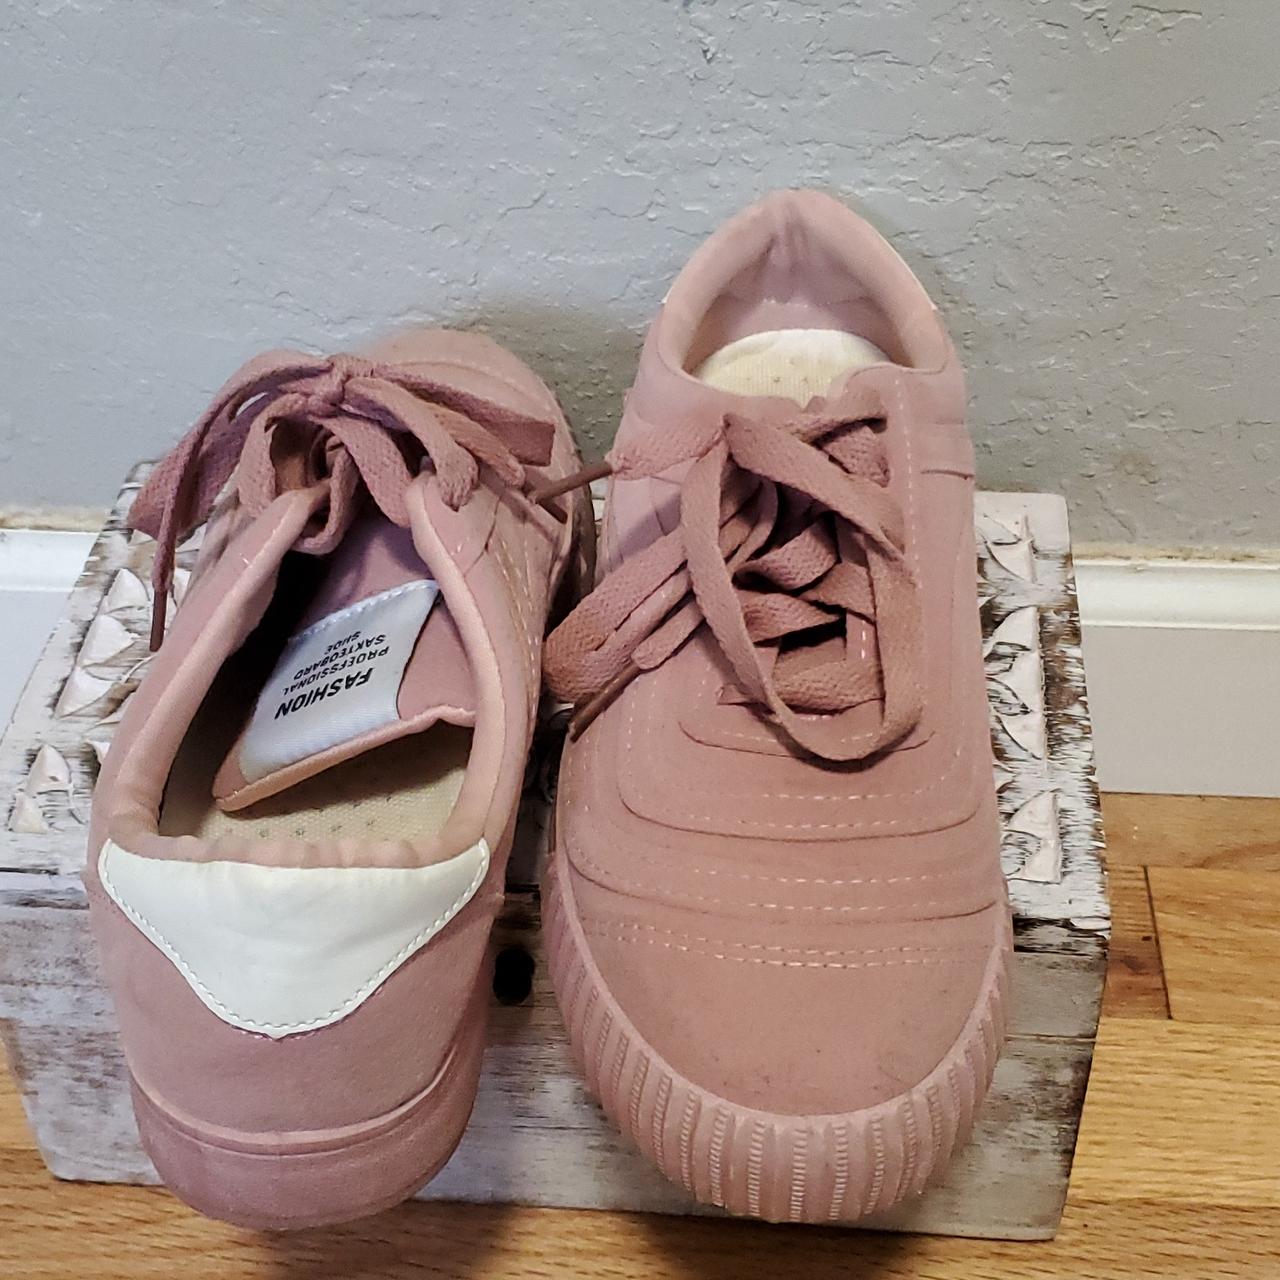 Pink LV comfortable skateboard shoes Men 8 Women - Depop